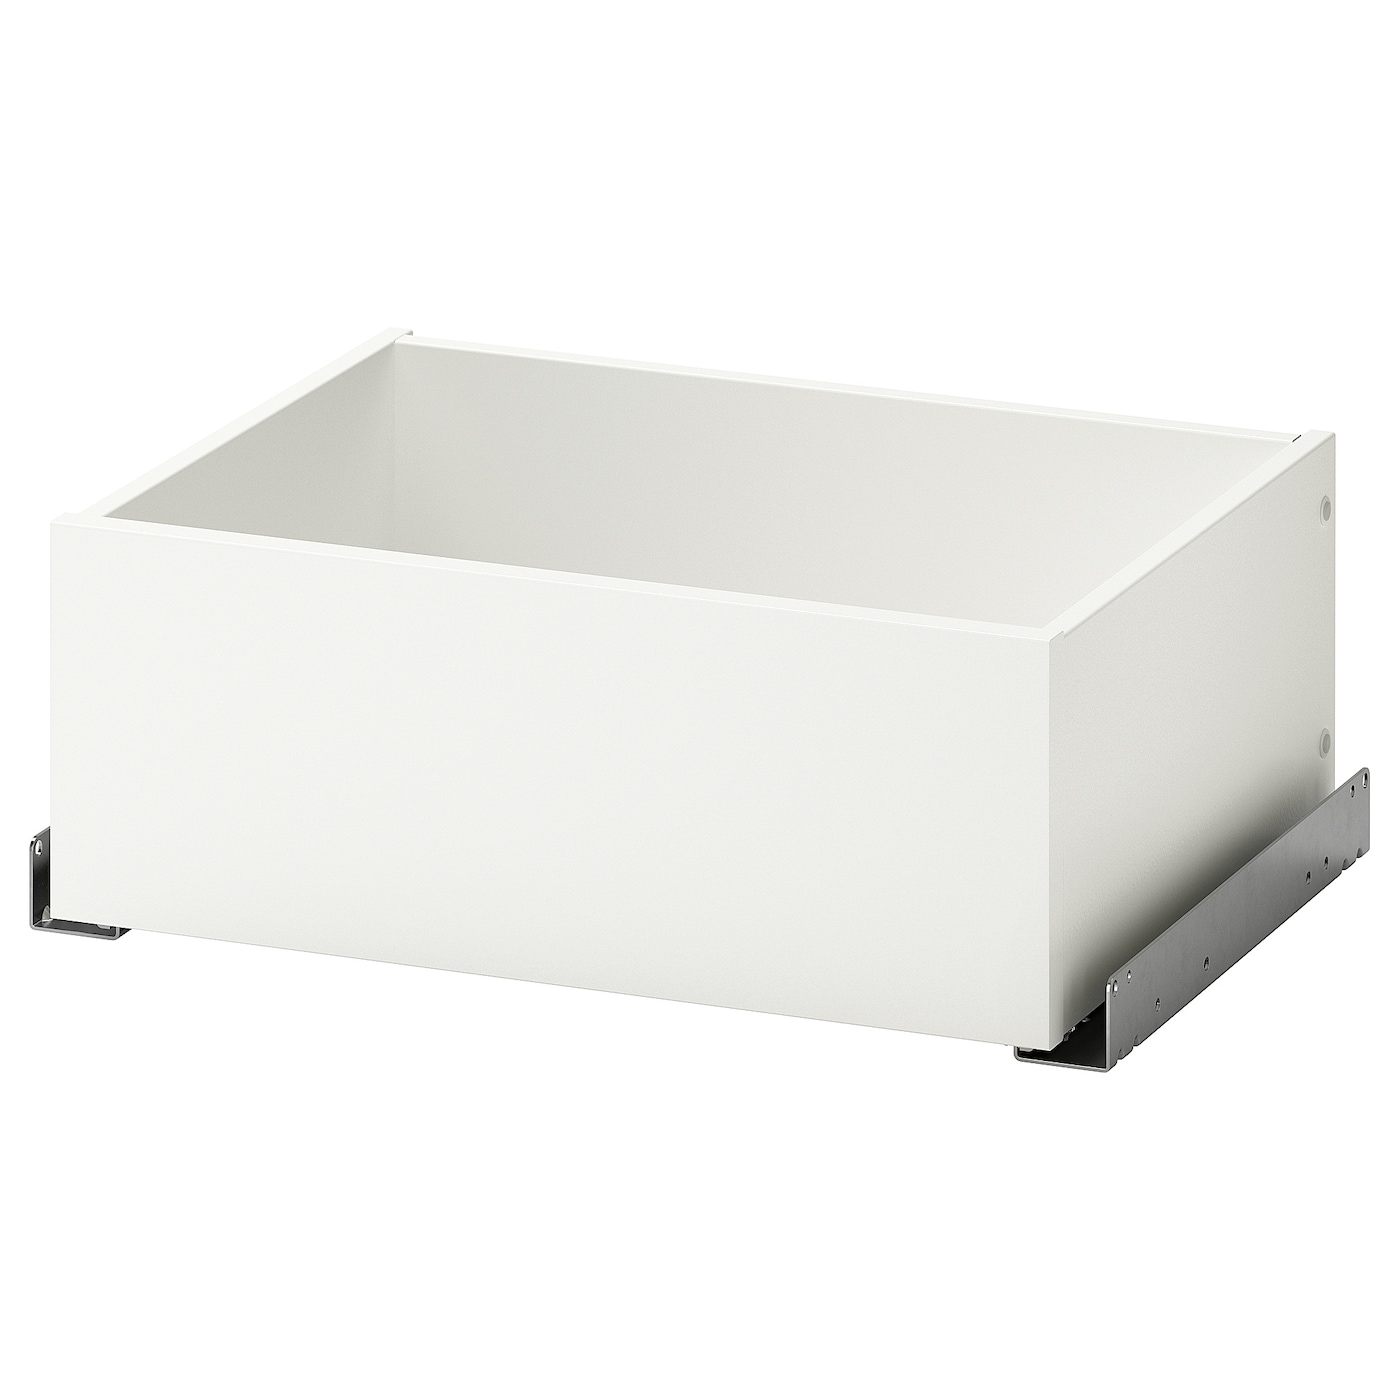 Ящик - IKEA KOMPLEMENT, 50x35 см, белый КОМПЛИМЕНТ ИКЕА